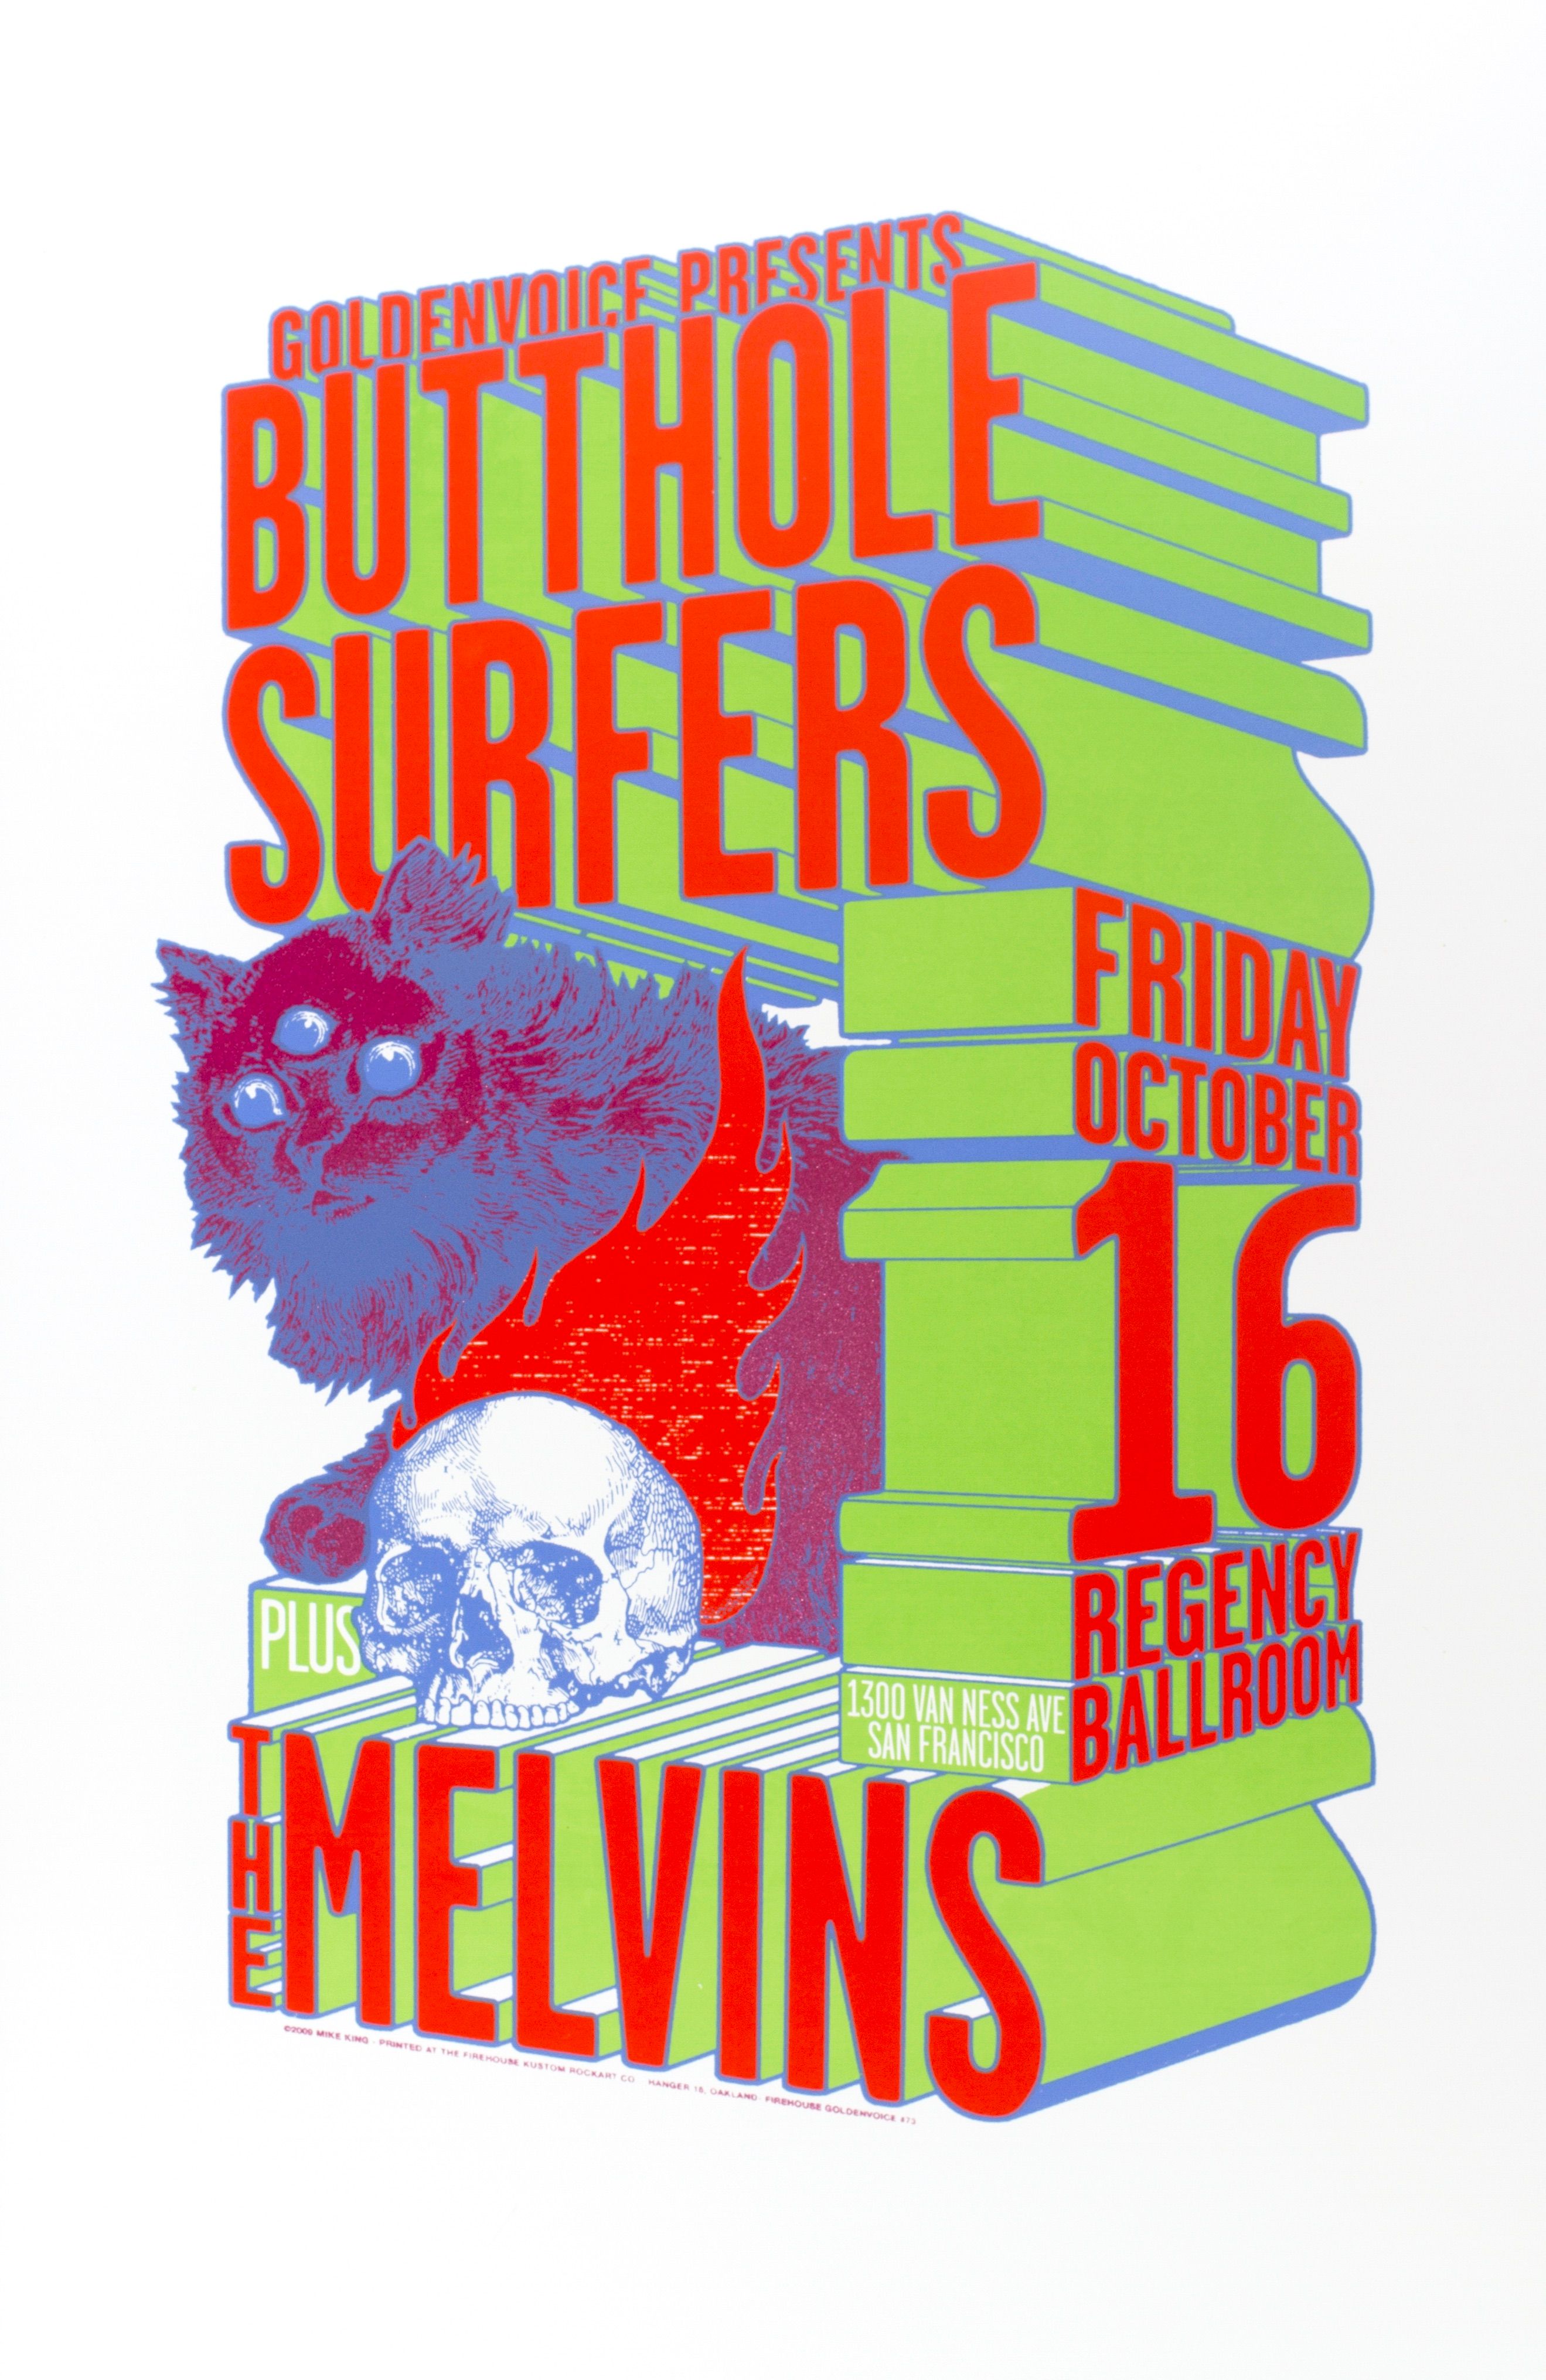 MXP-187.1 Butthole Surfers 2009 Regency Ballroom  Oct 16 Concert Poster